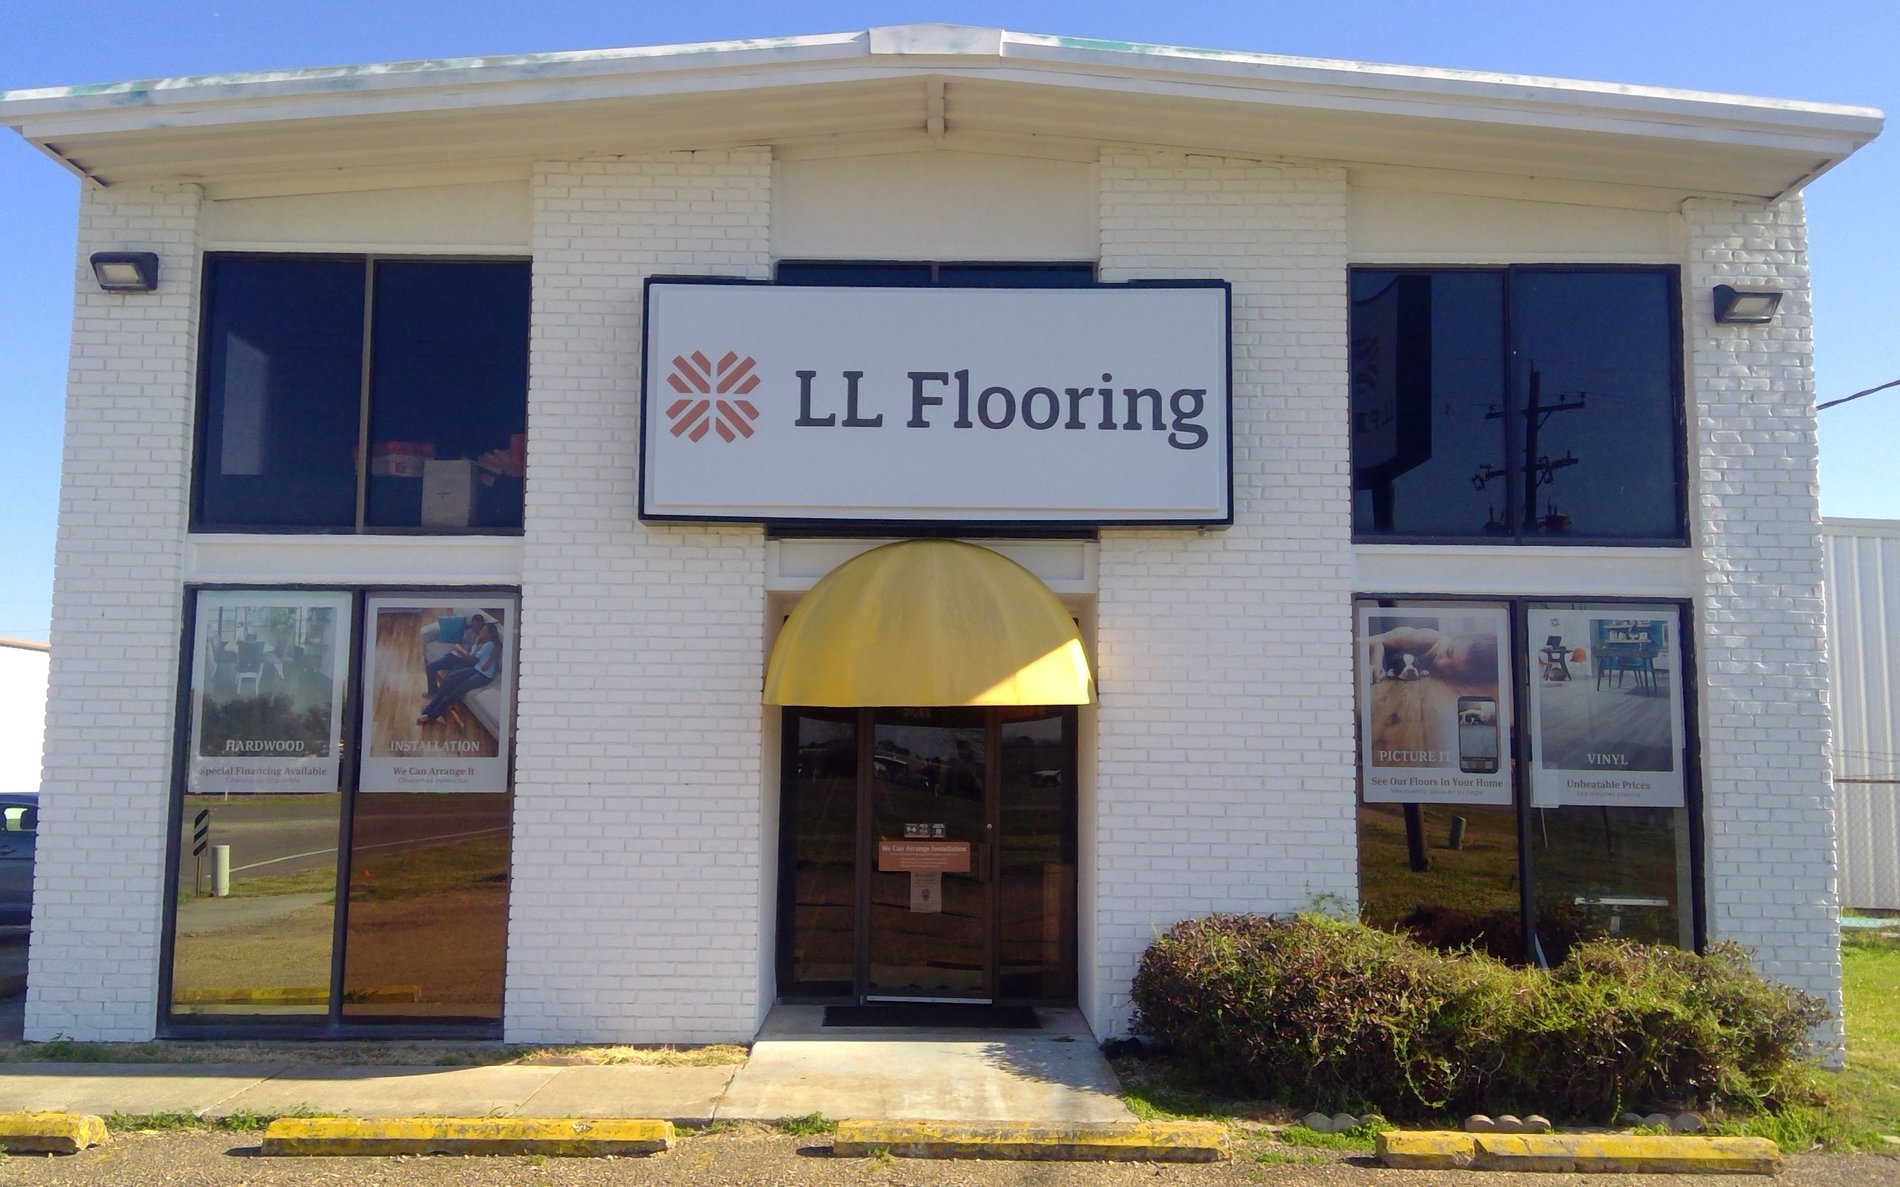 LL Flooring #1187 Broussard | 3401 U.S. 90 | Storefront